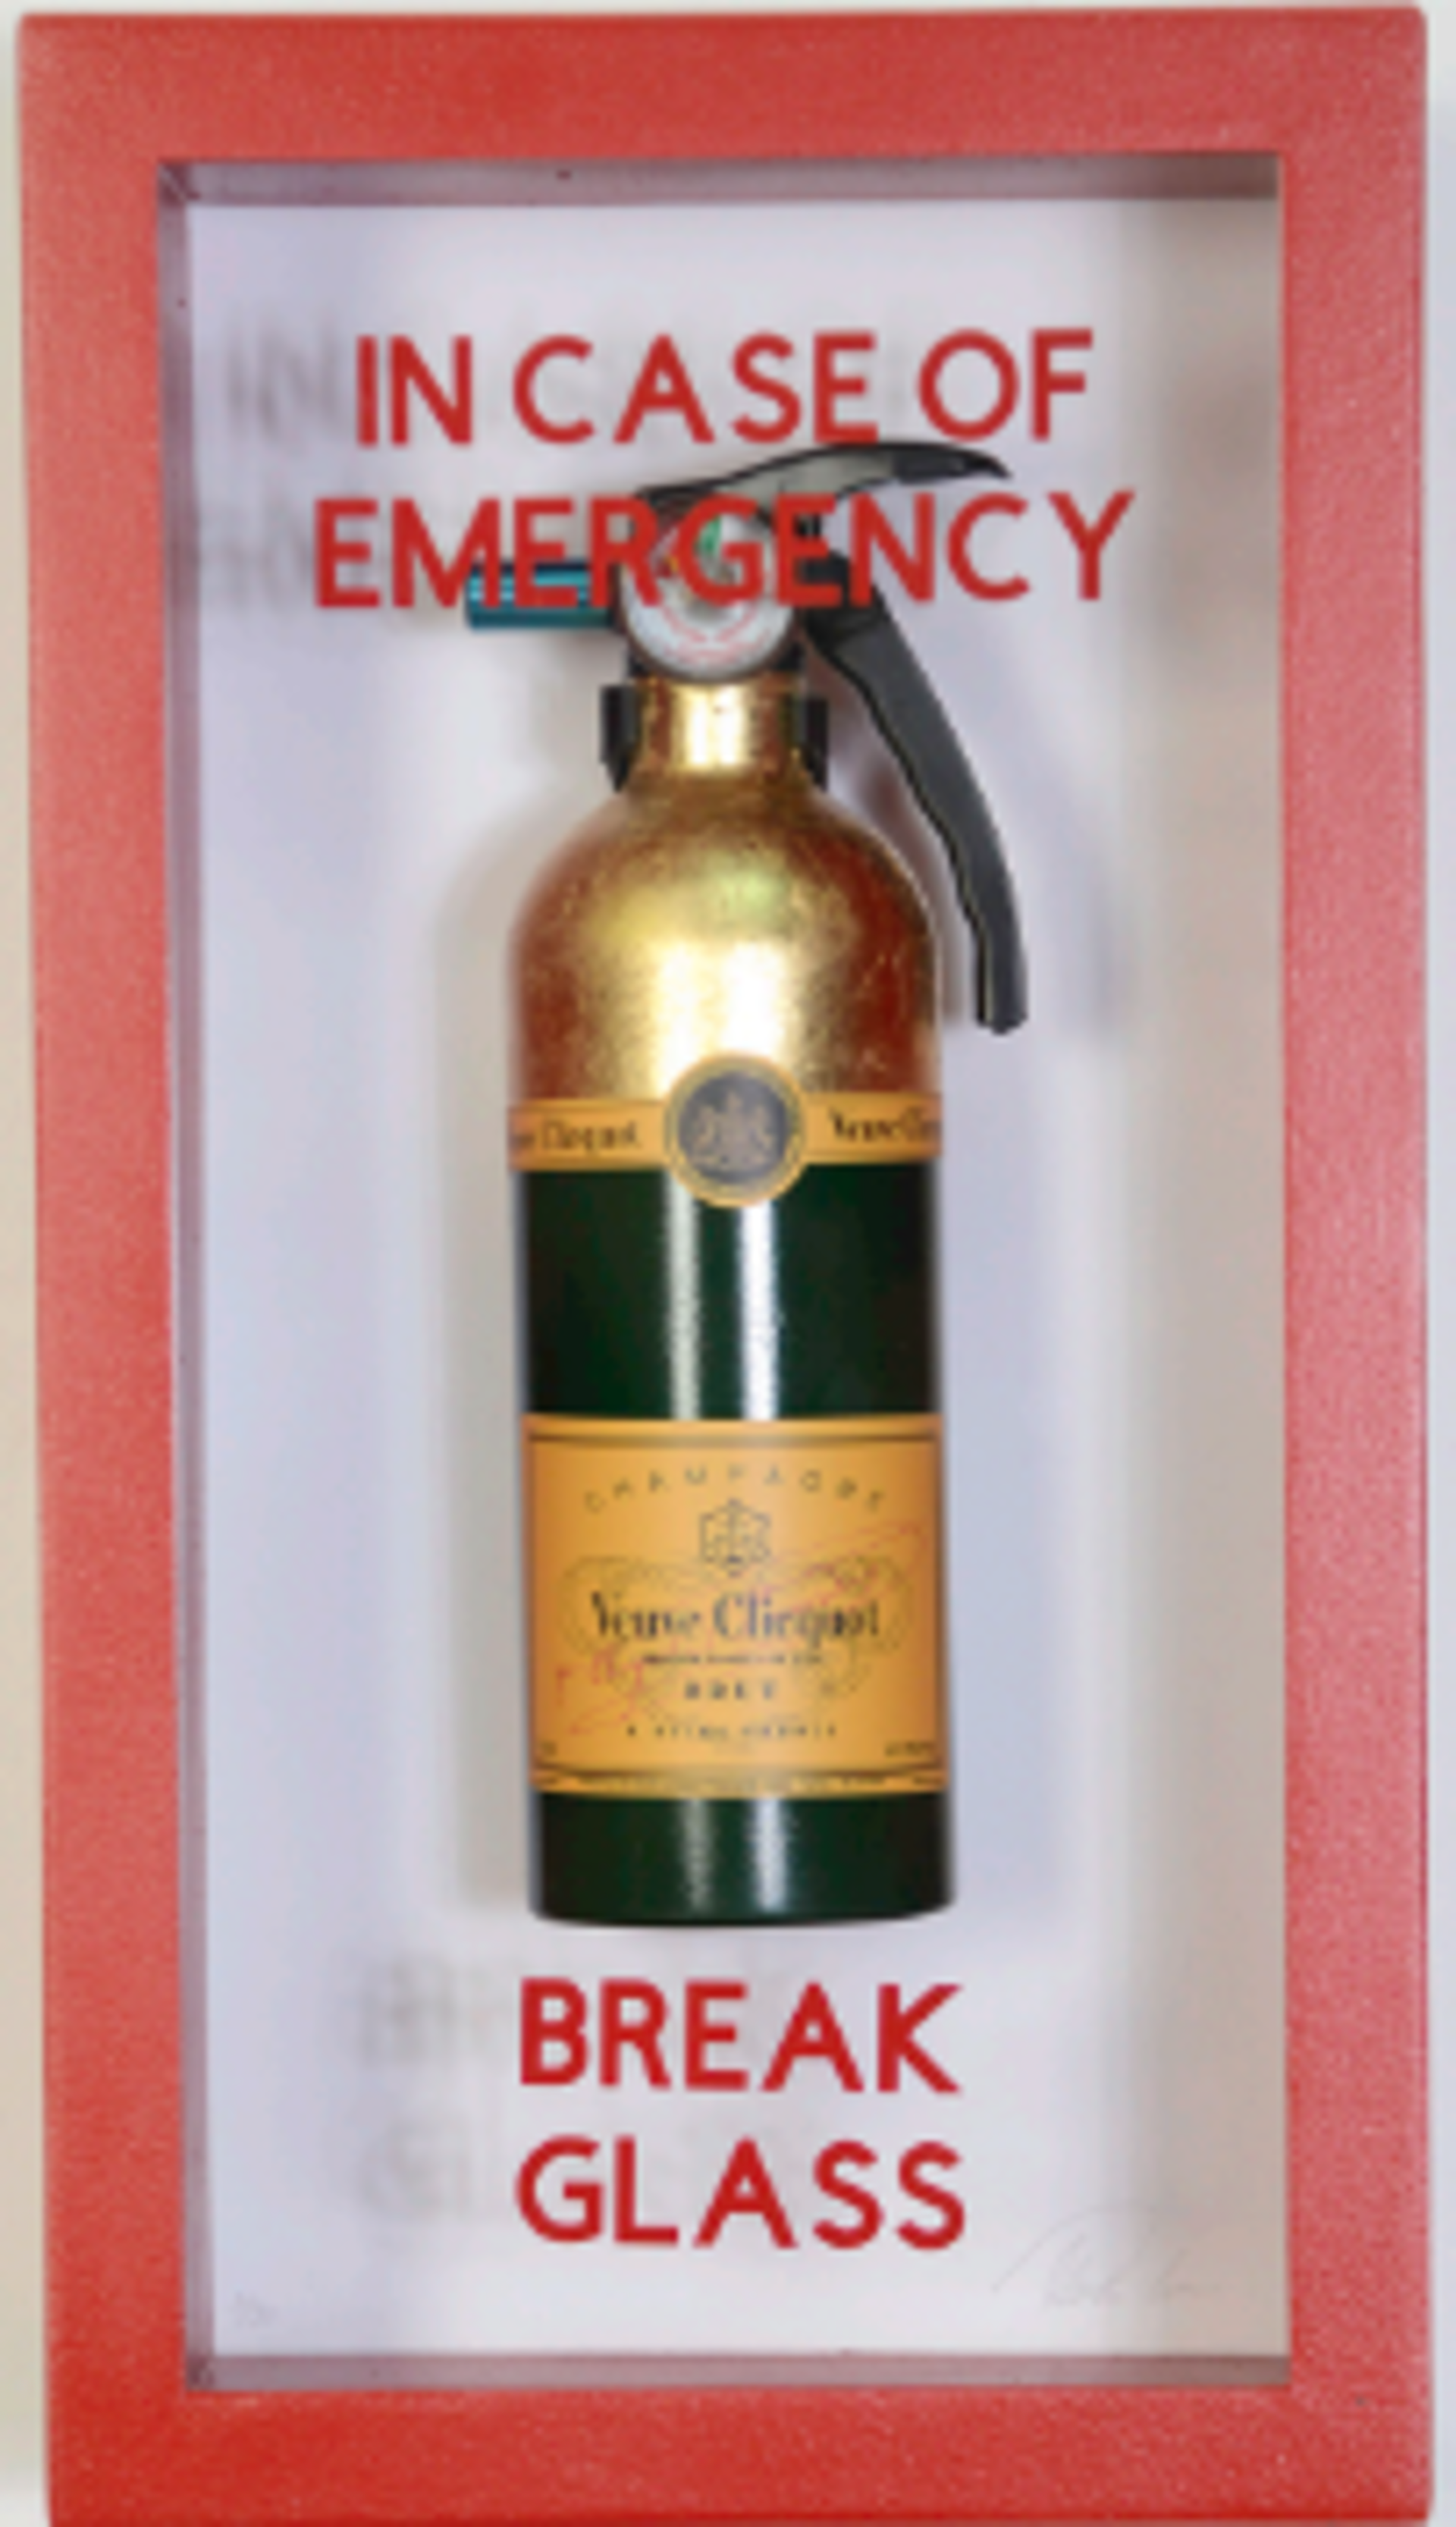 In Case of Emergency - Break Glass (Veuve Clicquot) by Plastic Jesus